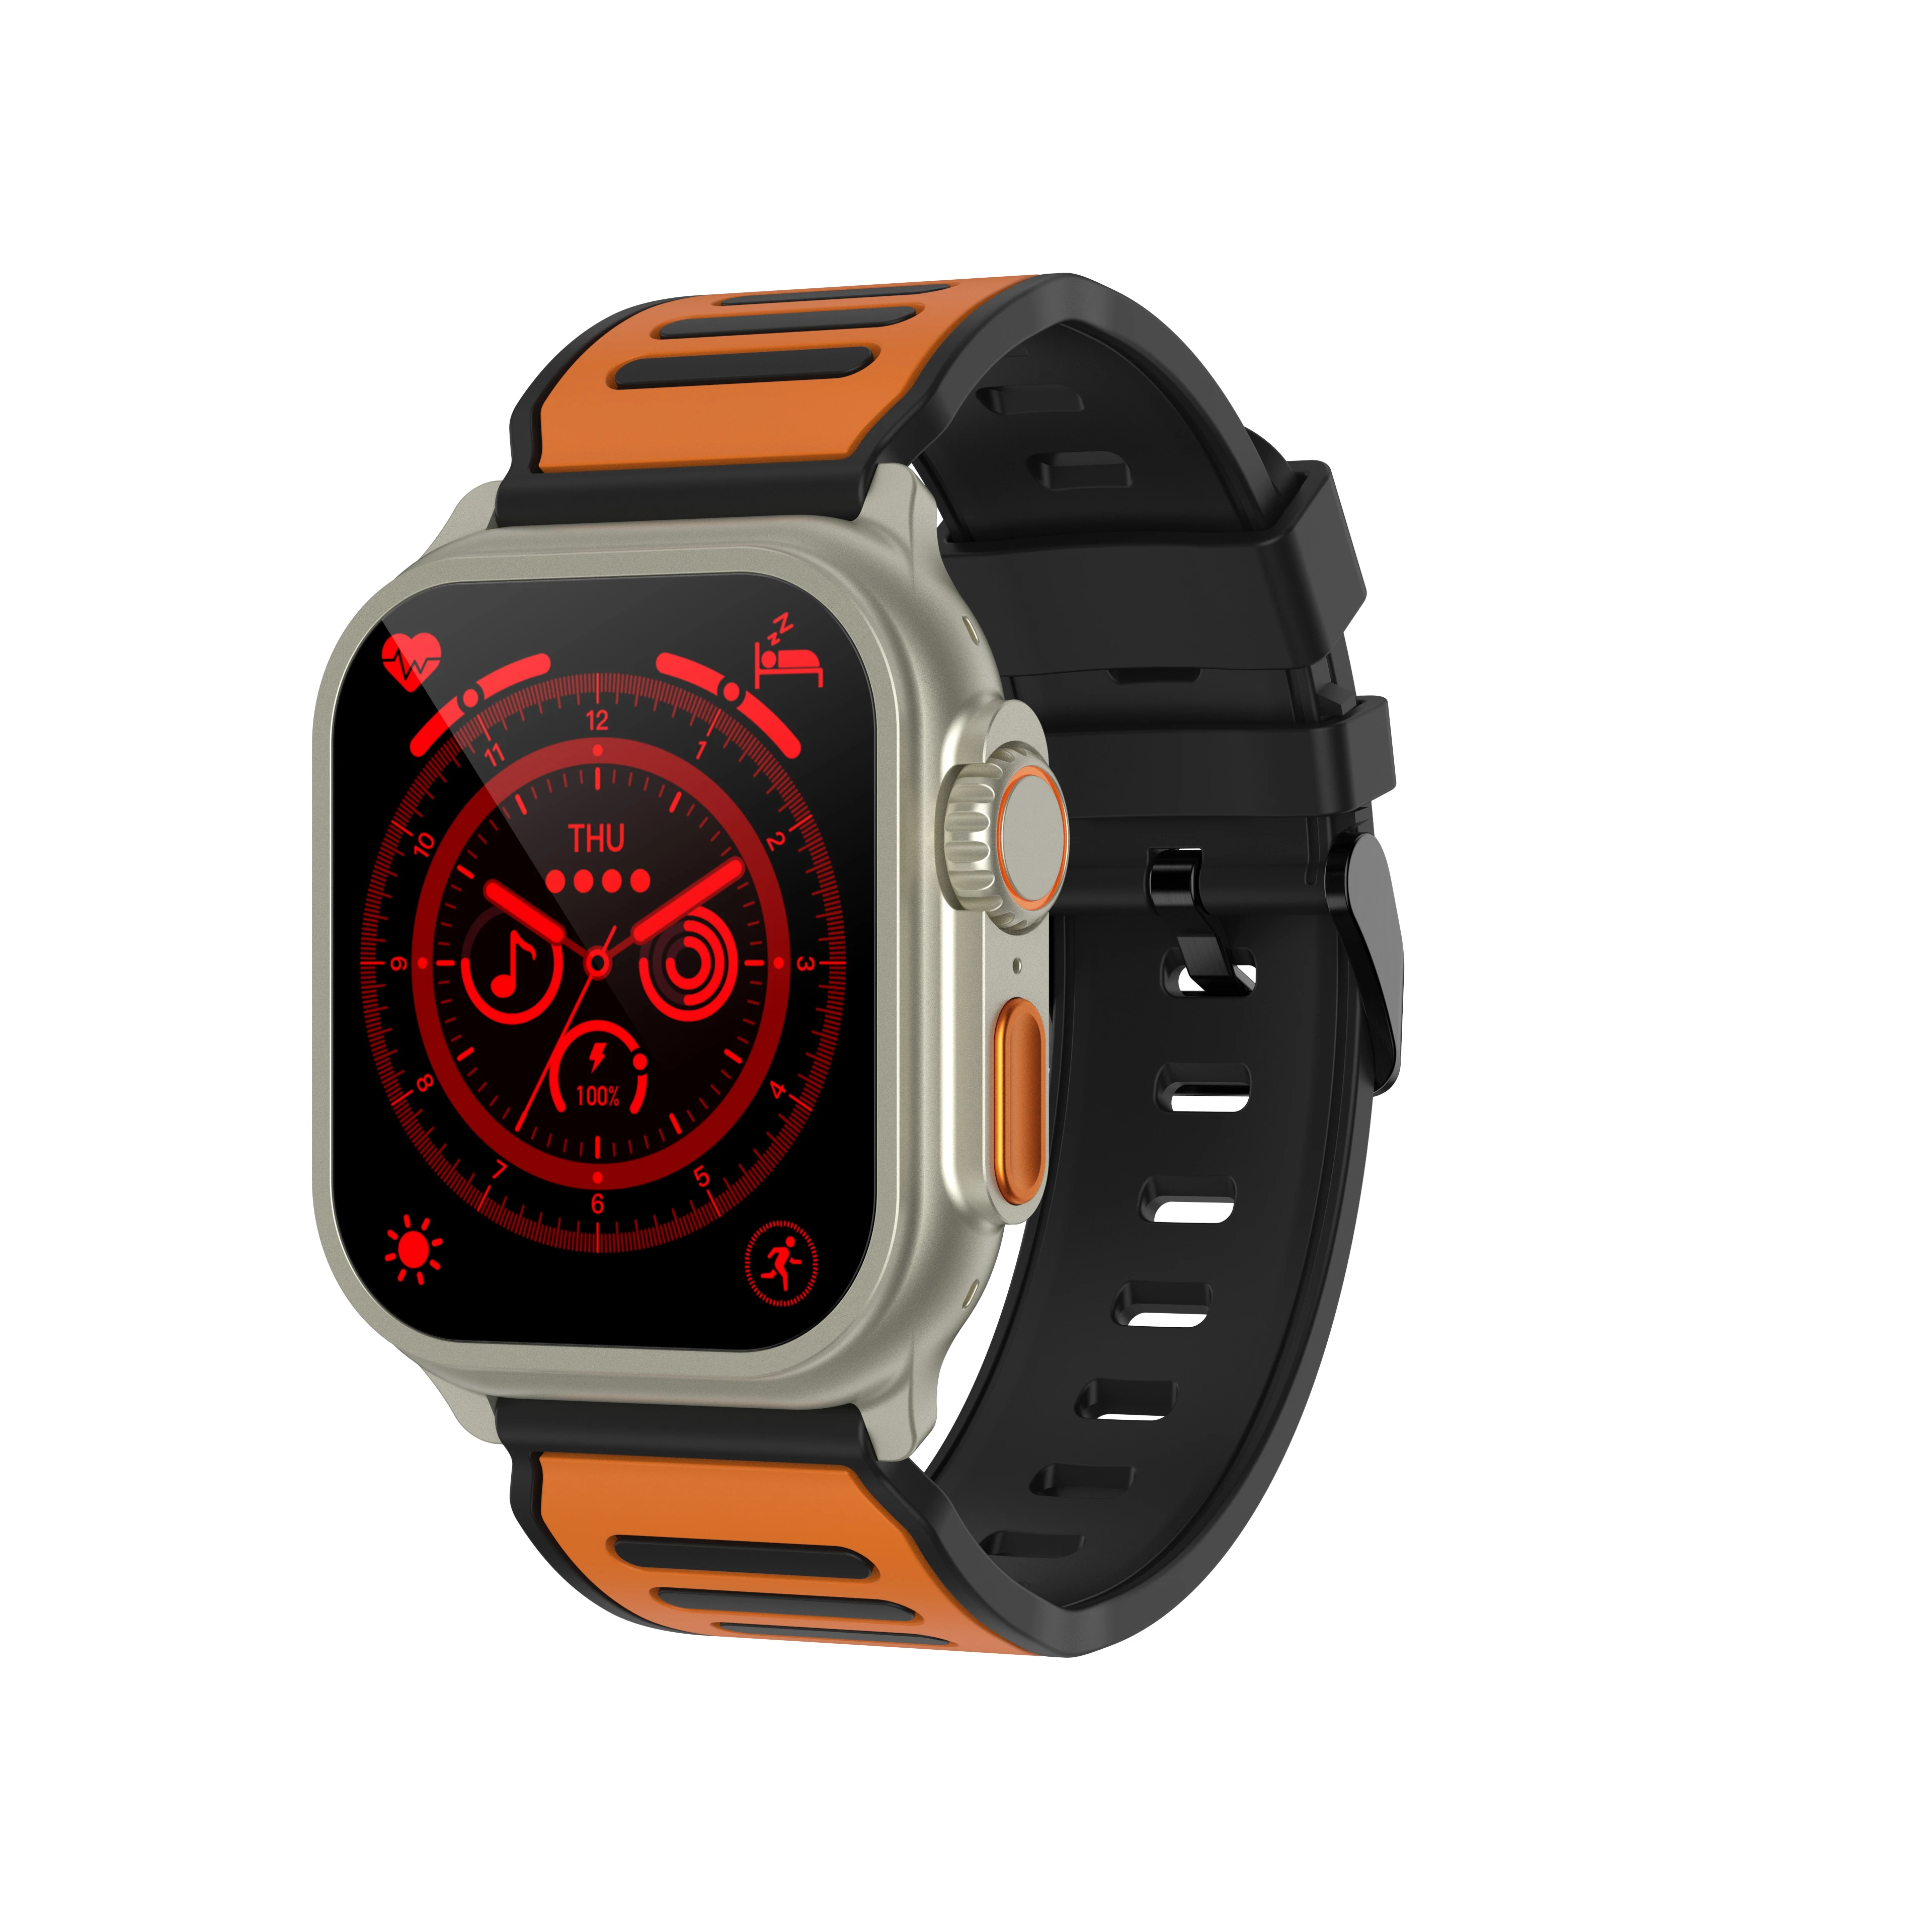 

Watch men,Women's wrist watch,with heart rate sleep tracking, sports mode, waterproof smart watch,Message Reminder,fashion